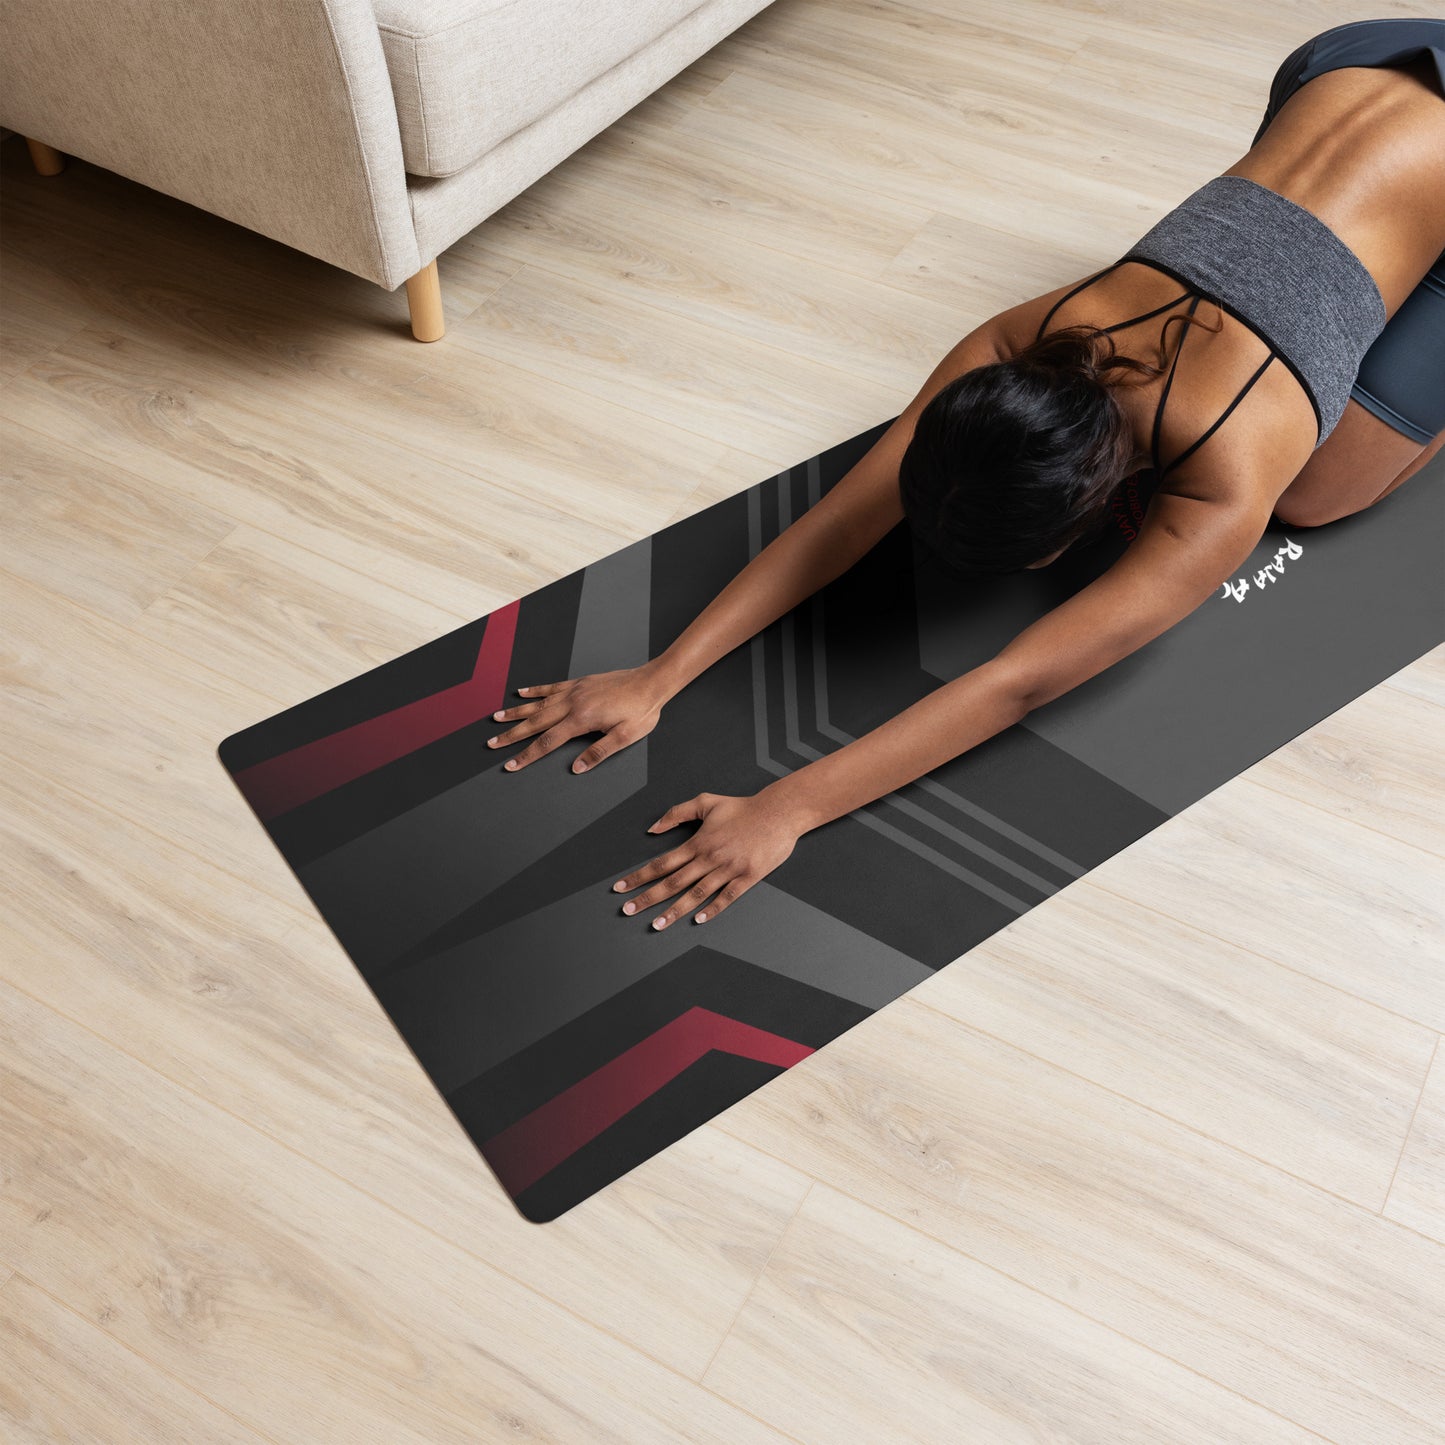 Raja Academy Stretching / Yoga Mat